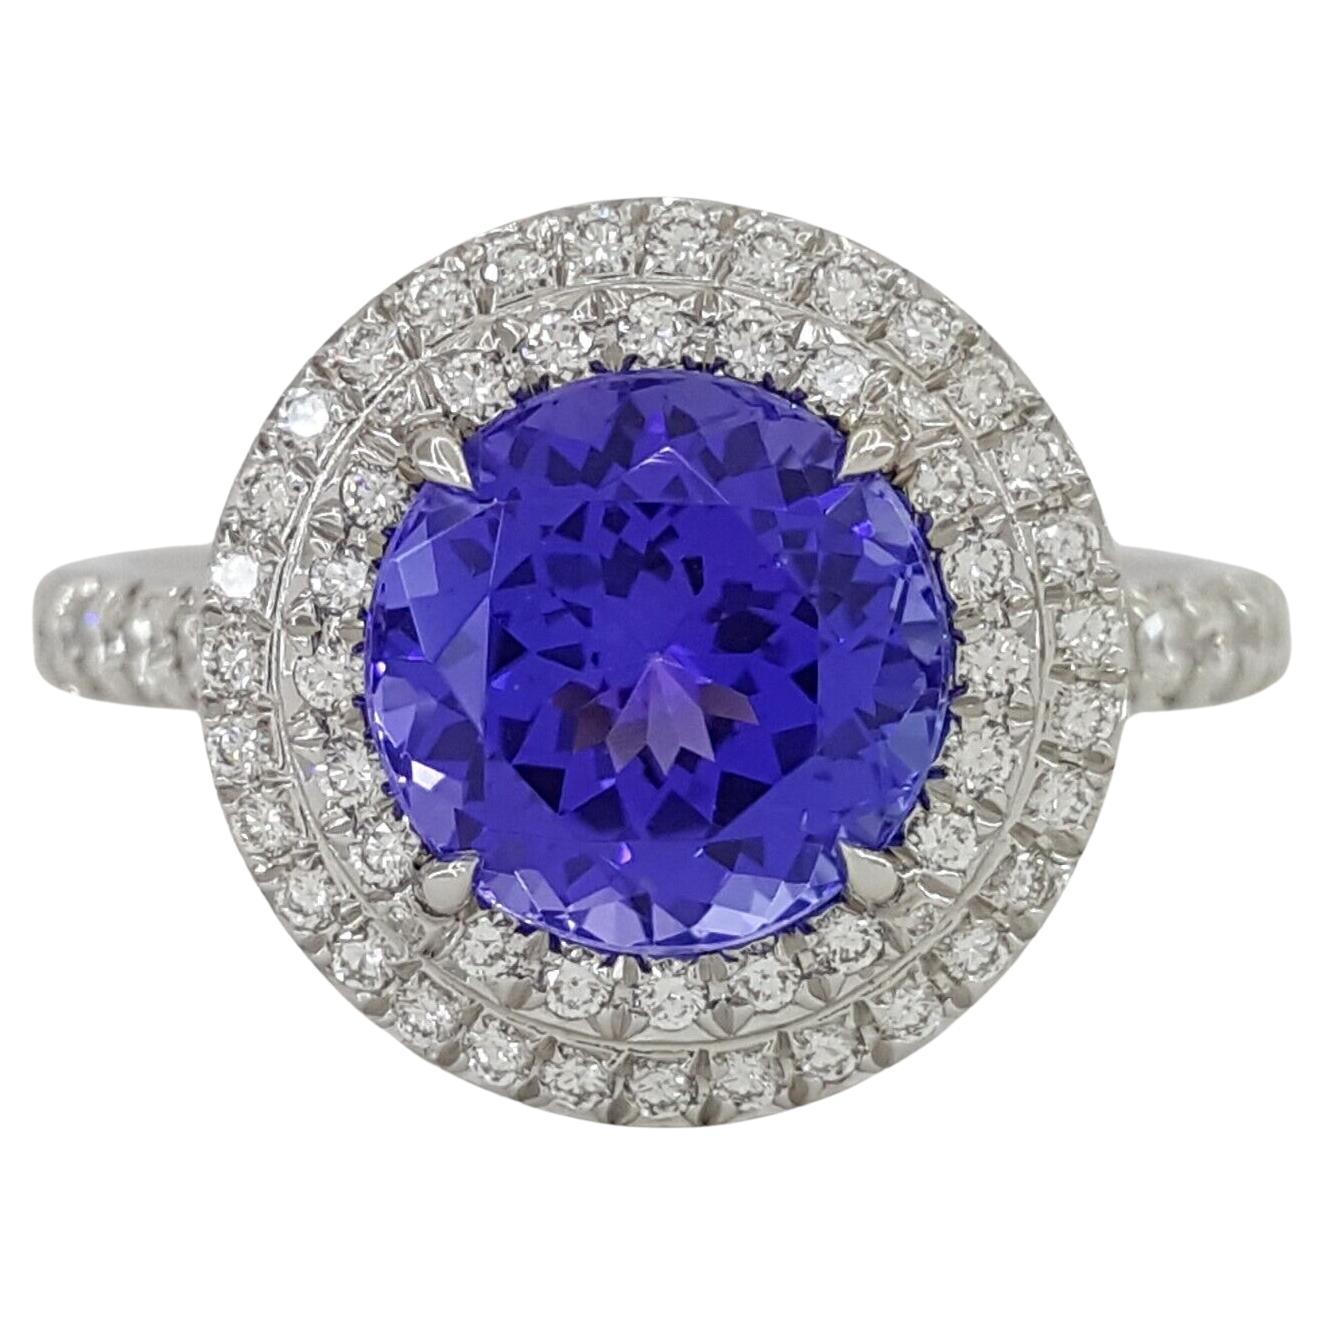 Tiffany & Co. Platinum Soleste 2.63 Carat Excellent Cut Diamond Ring For Sale